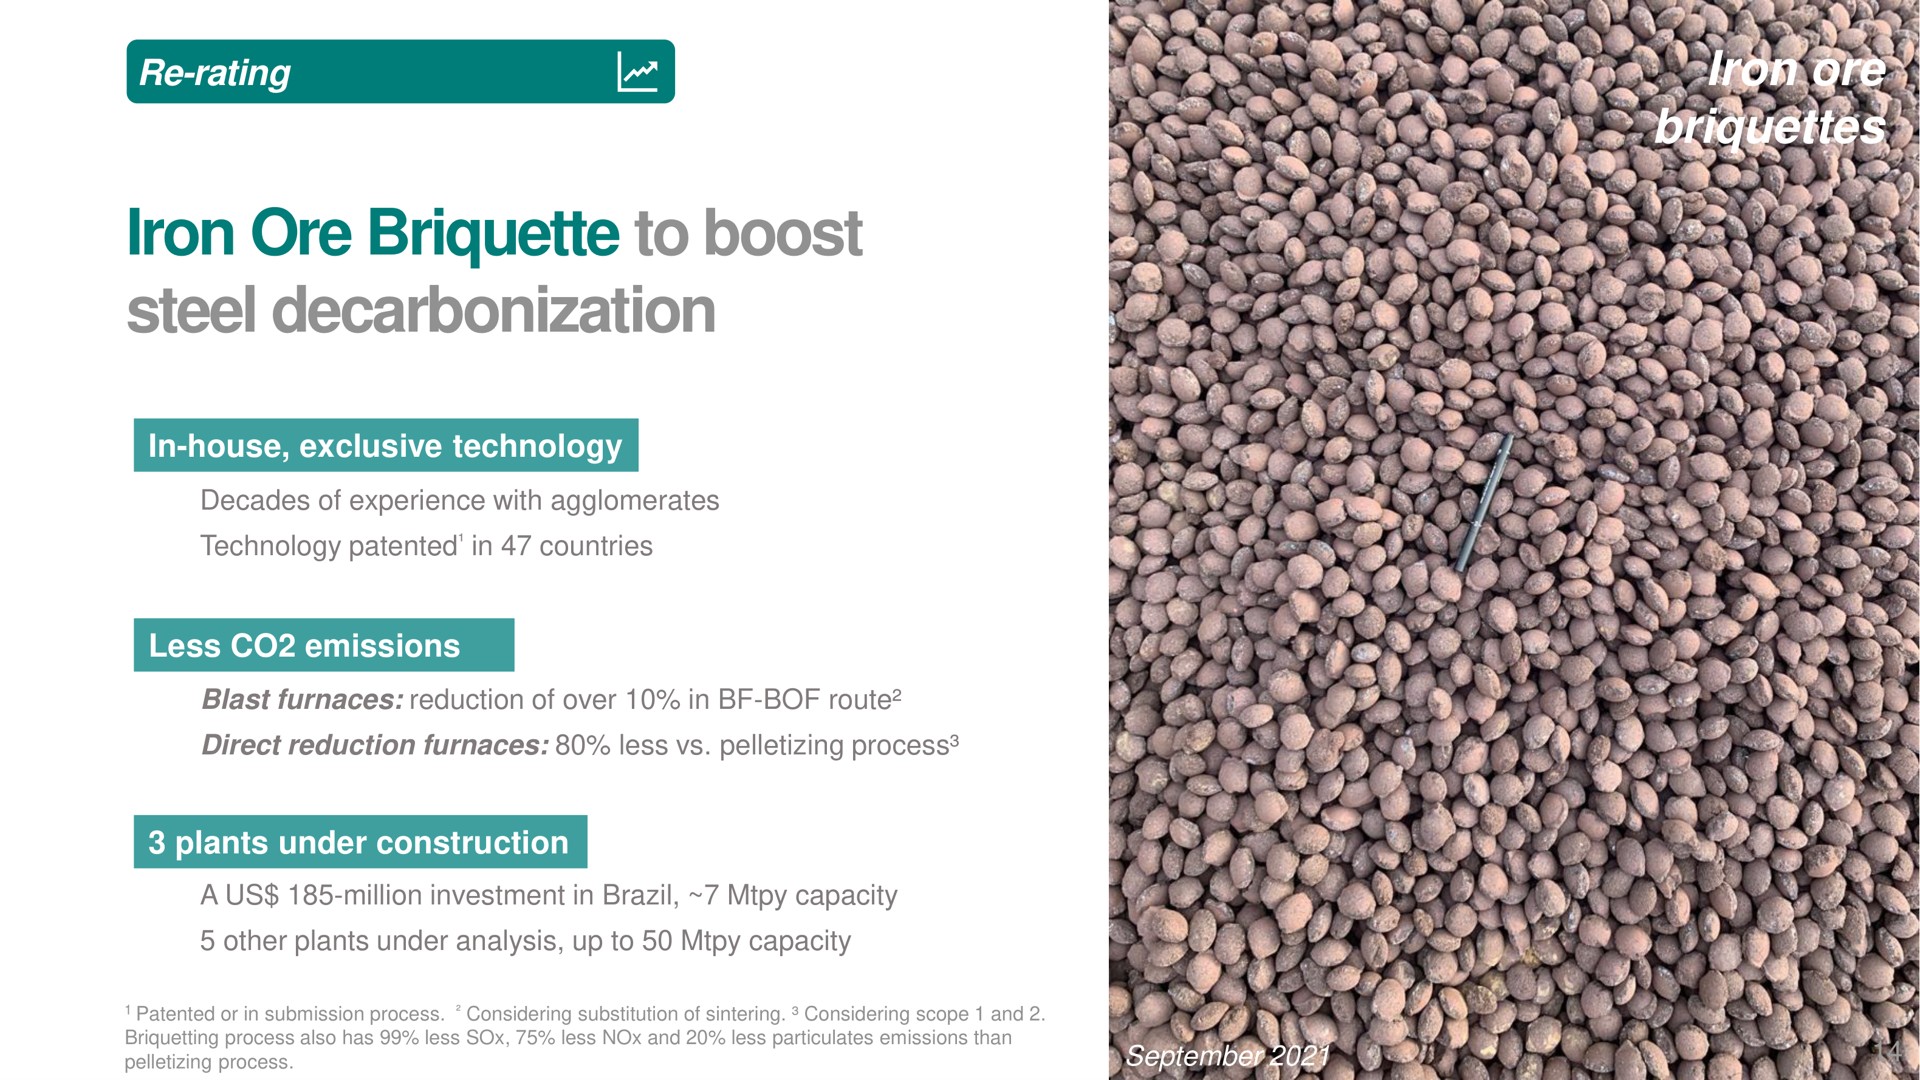 iron ore briquettes iron ore briquette to boost steel decarbonization | Vale